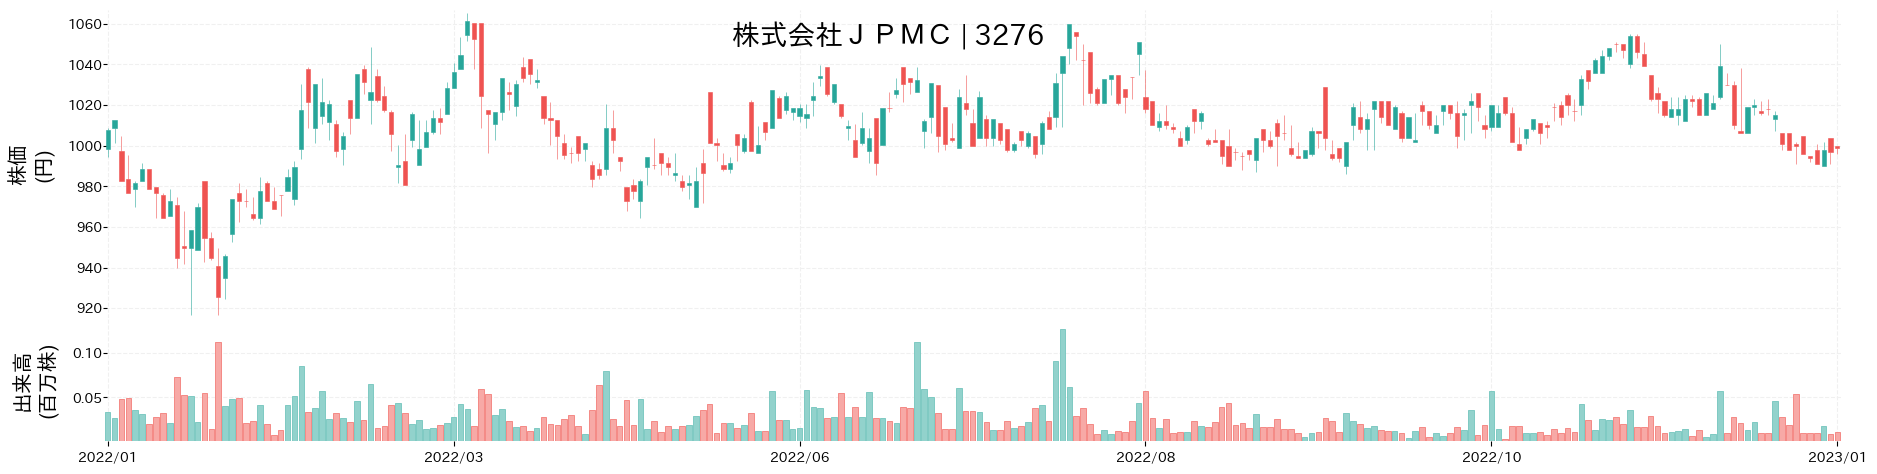 JPMCの株価推移(2022)